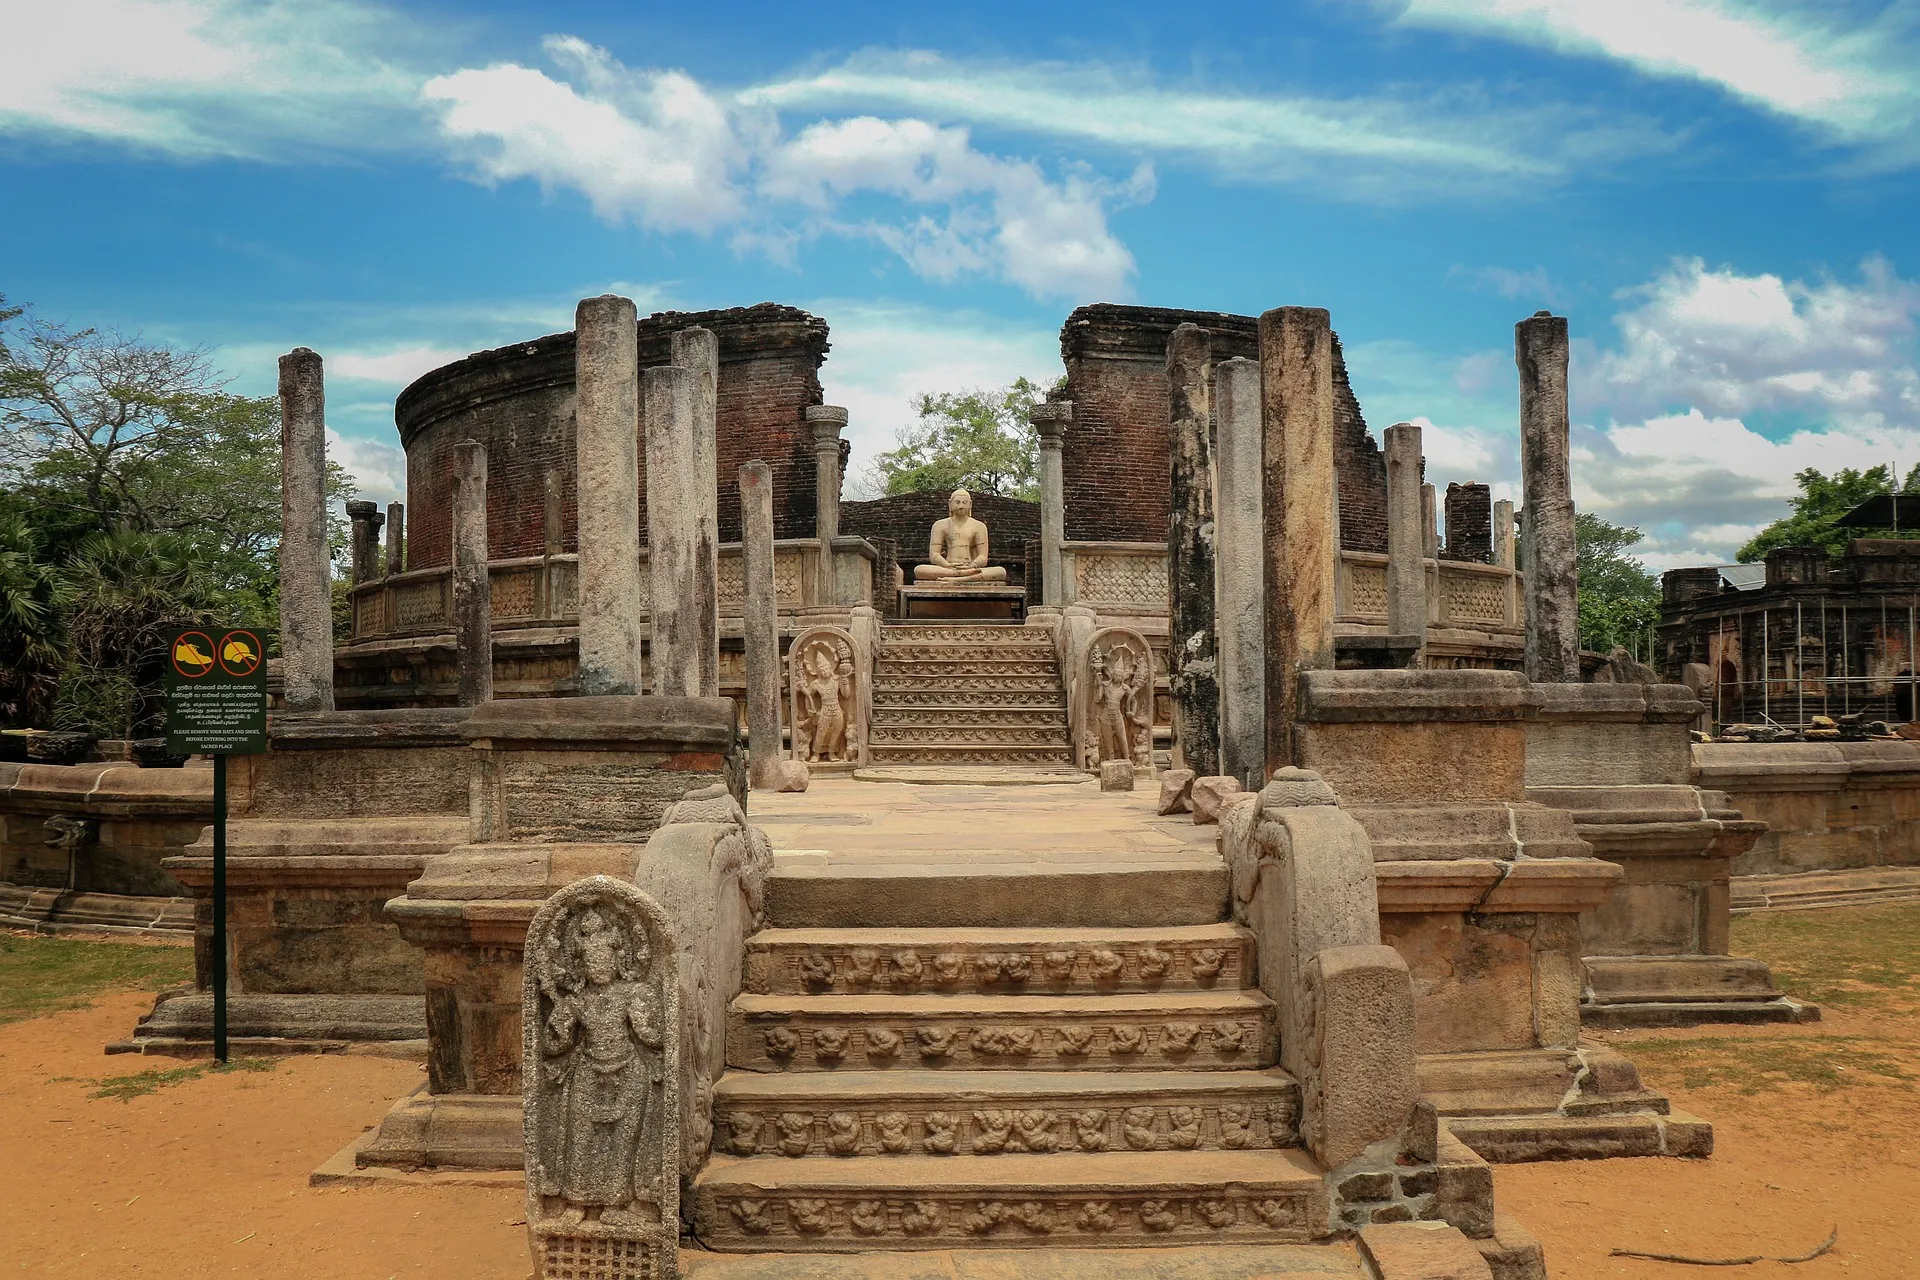 The Sacred Quadrangle in polonnaruwa